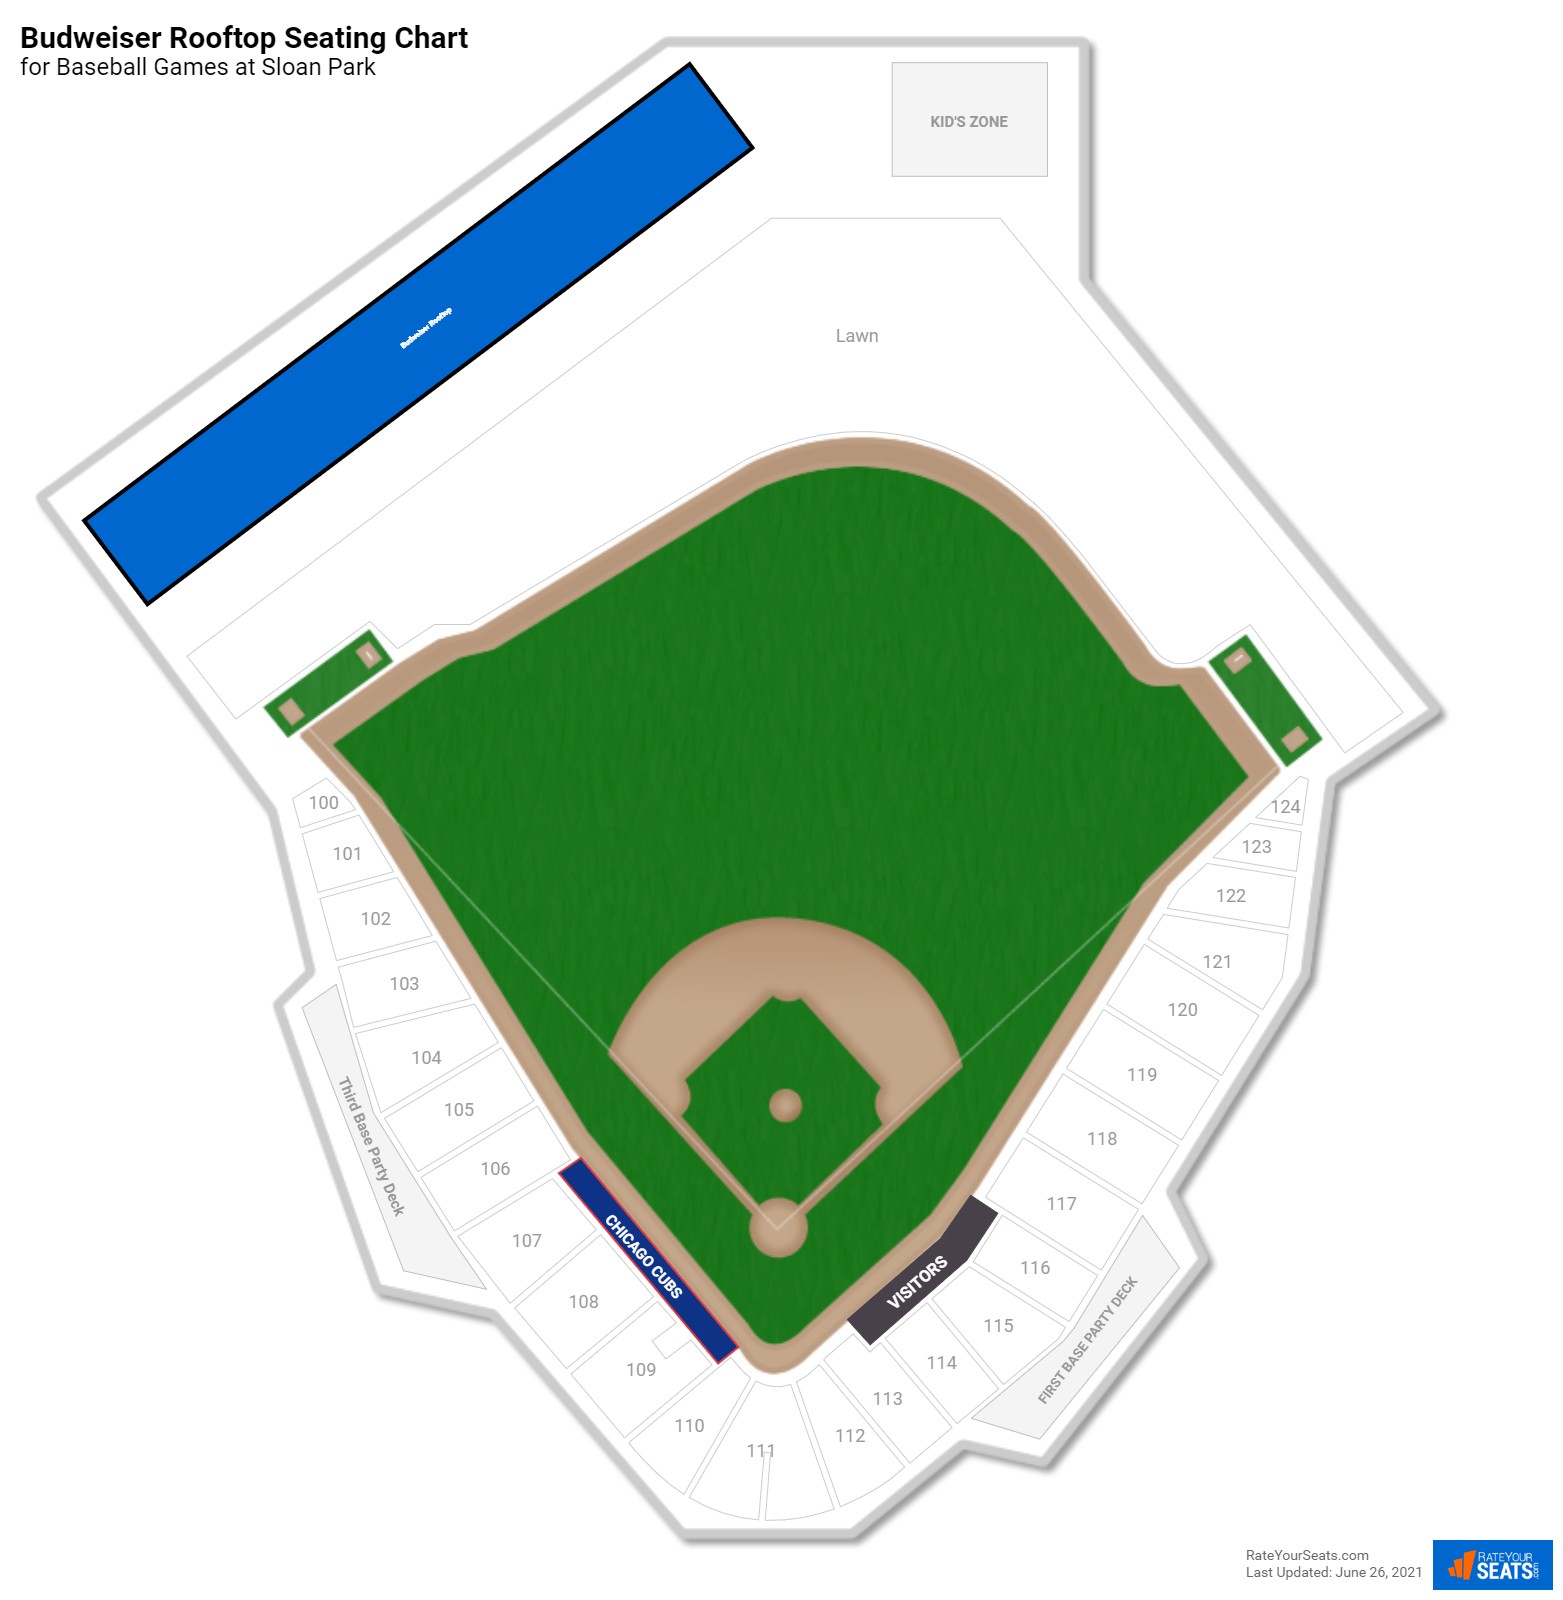 Baseball Budweiser Rooftop Seating Chart at Sloan Park